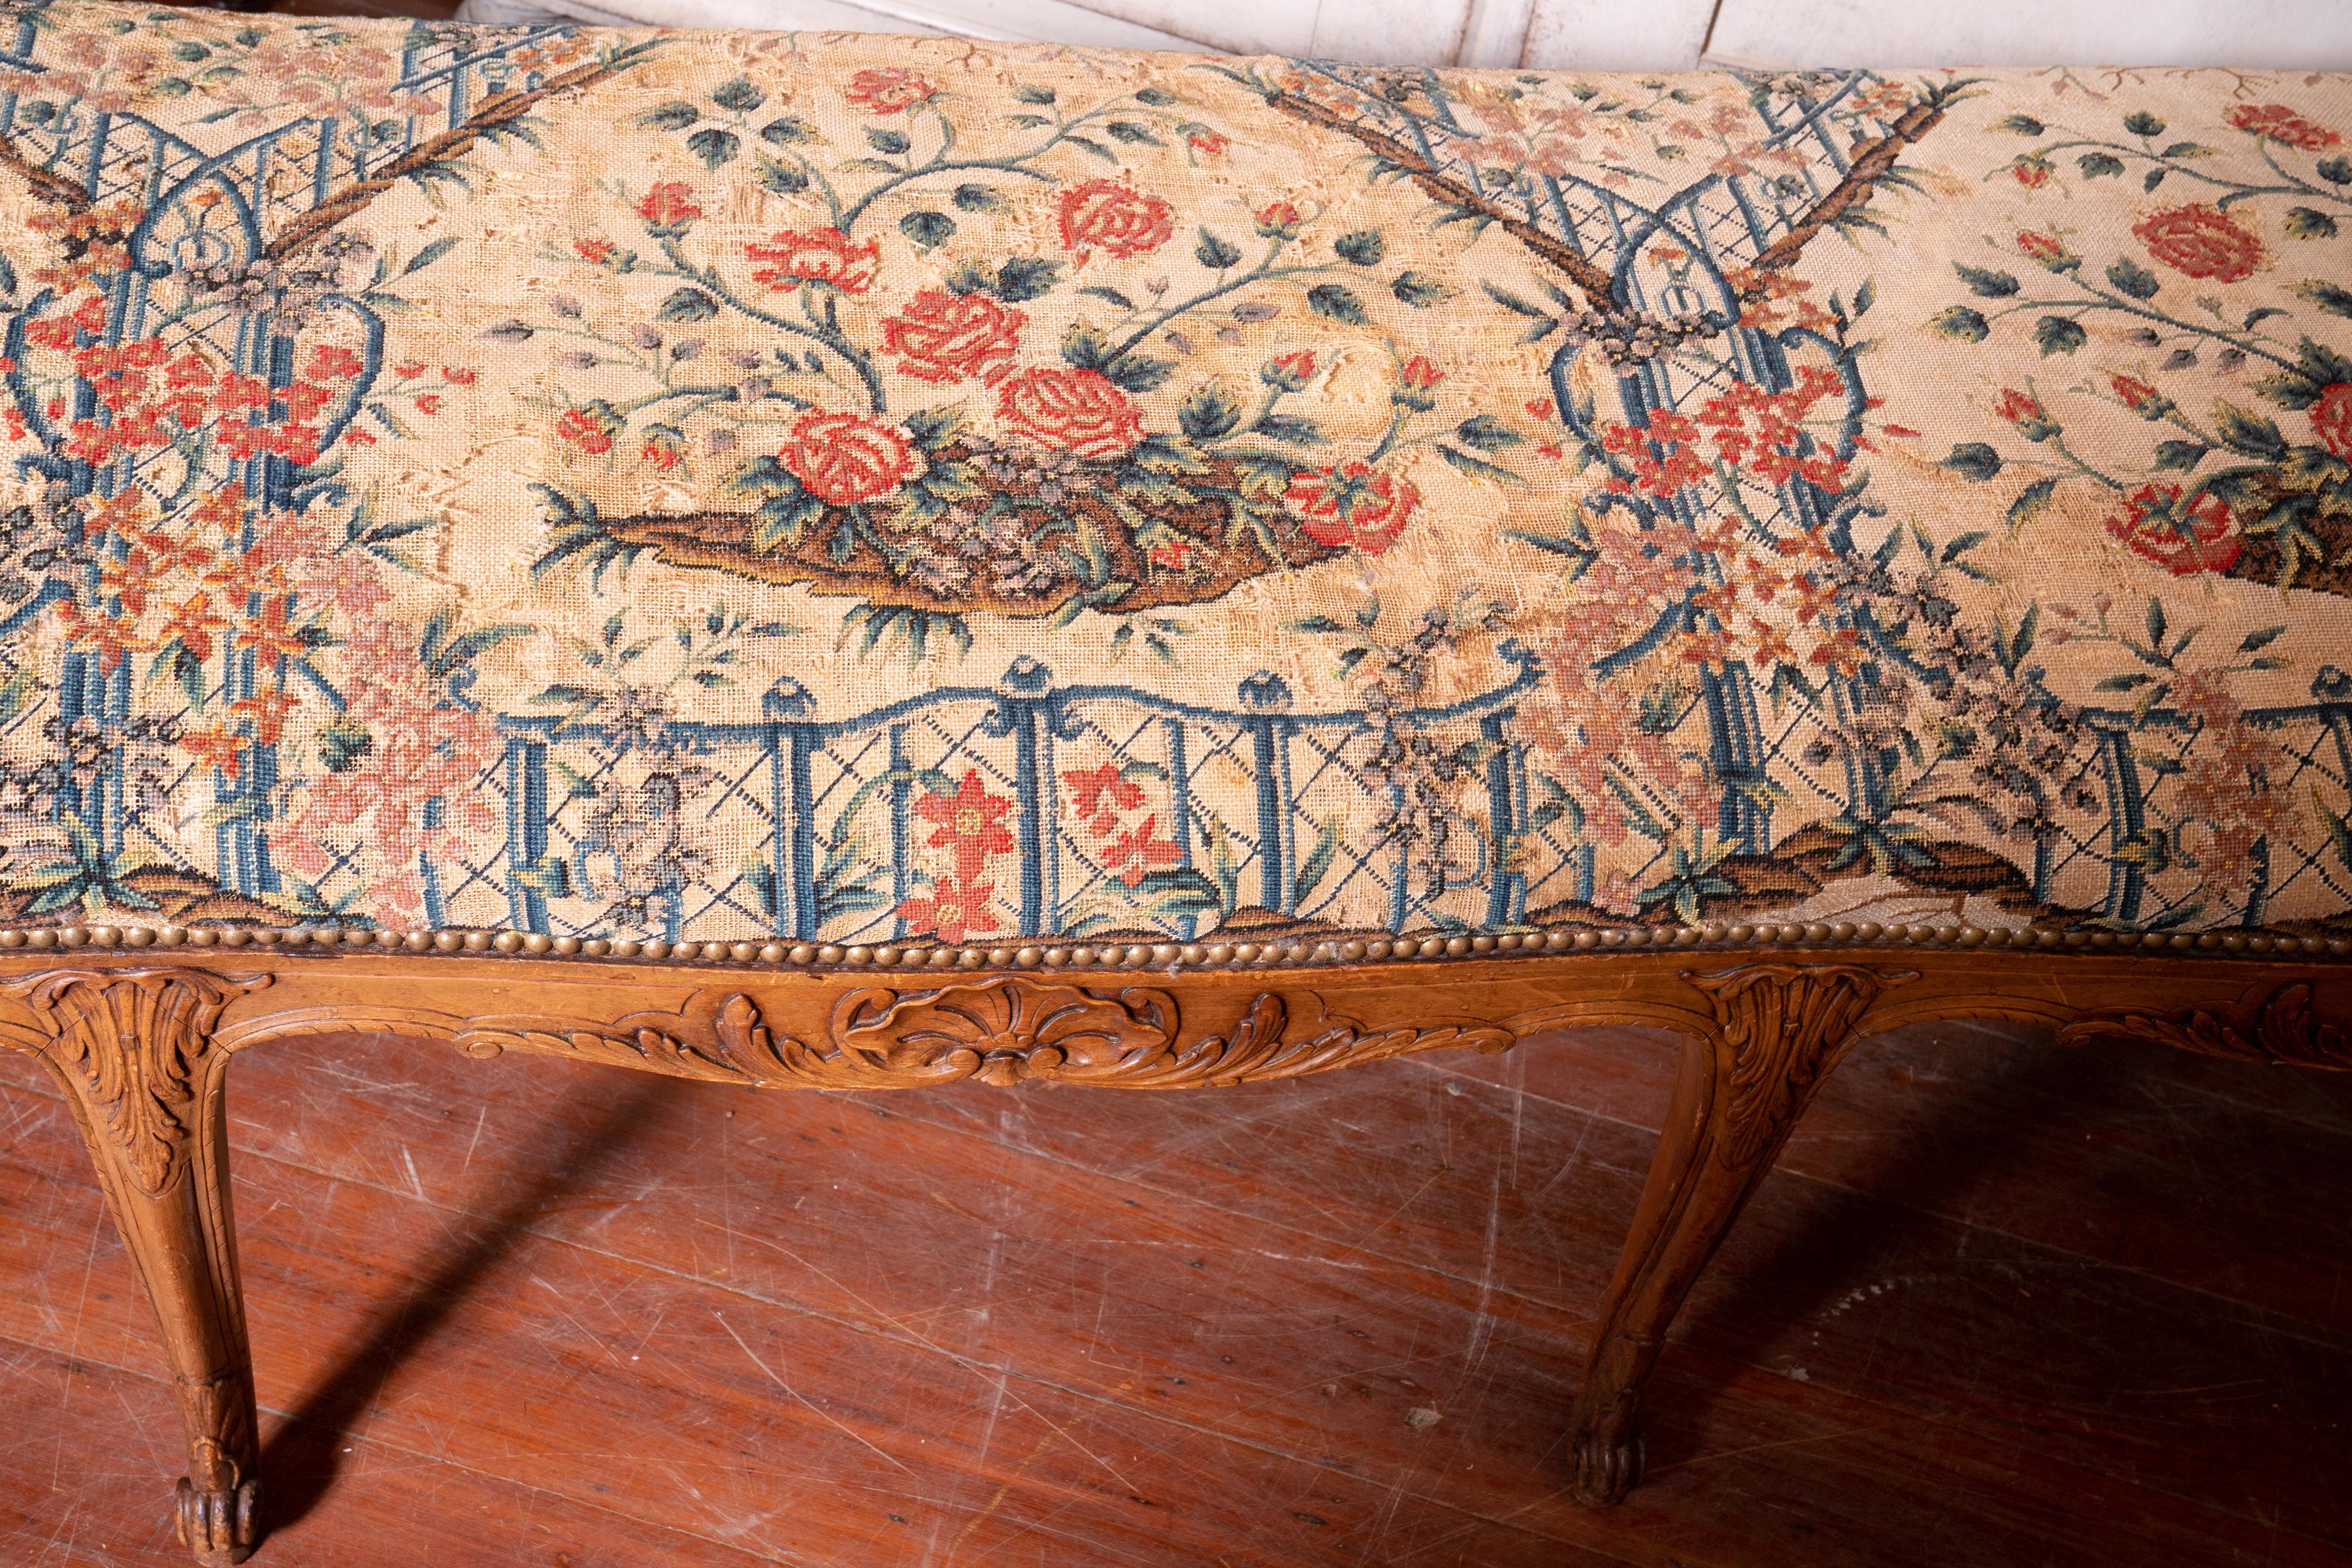 George III Beautiful 19th Century Walnut Bench with Original Needlepoint Cushion